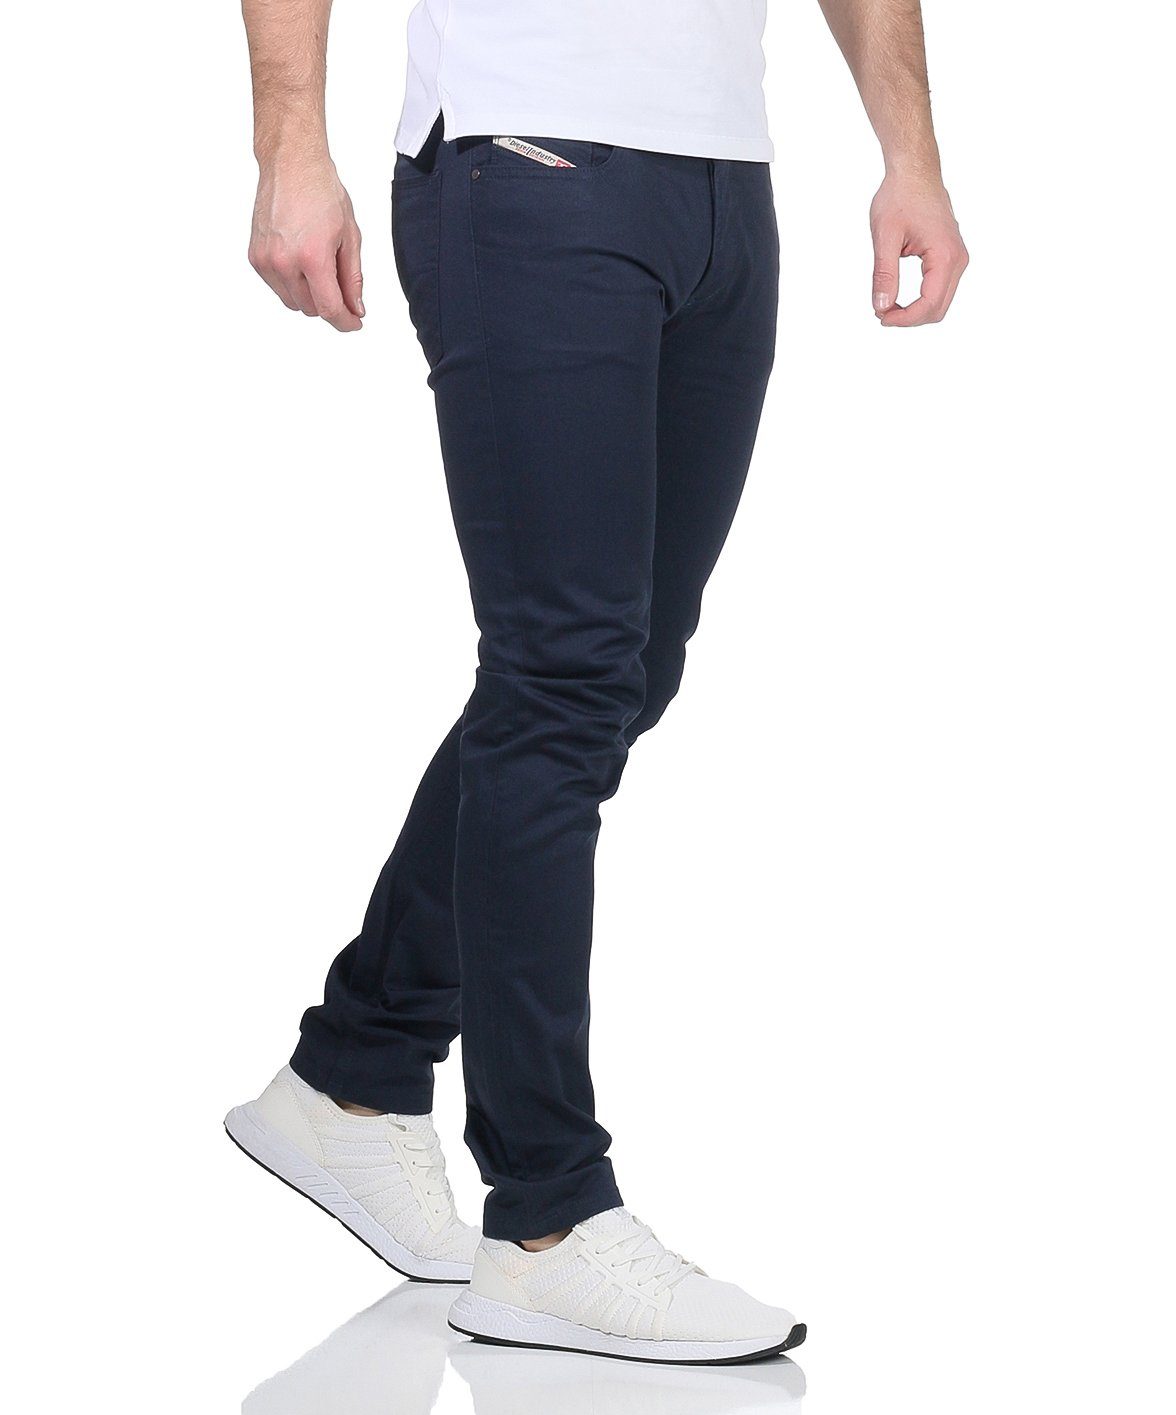 Hose, Skinny-fit-Jeans Einheitsgröße inch Sommer, 32 Diesel Herren Länge: R-TROXER-A Diesel Skinny-fit-Jeans 5-Pocket-Style, Navy